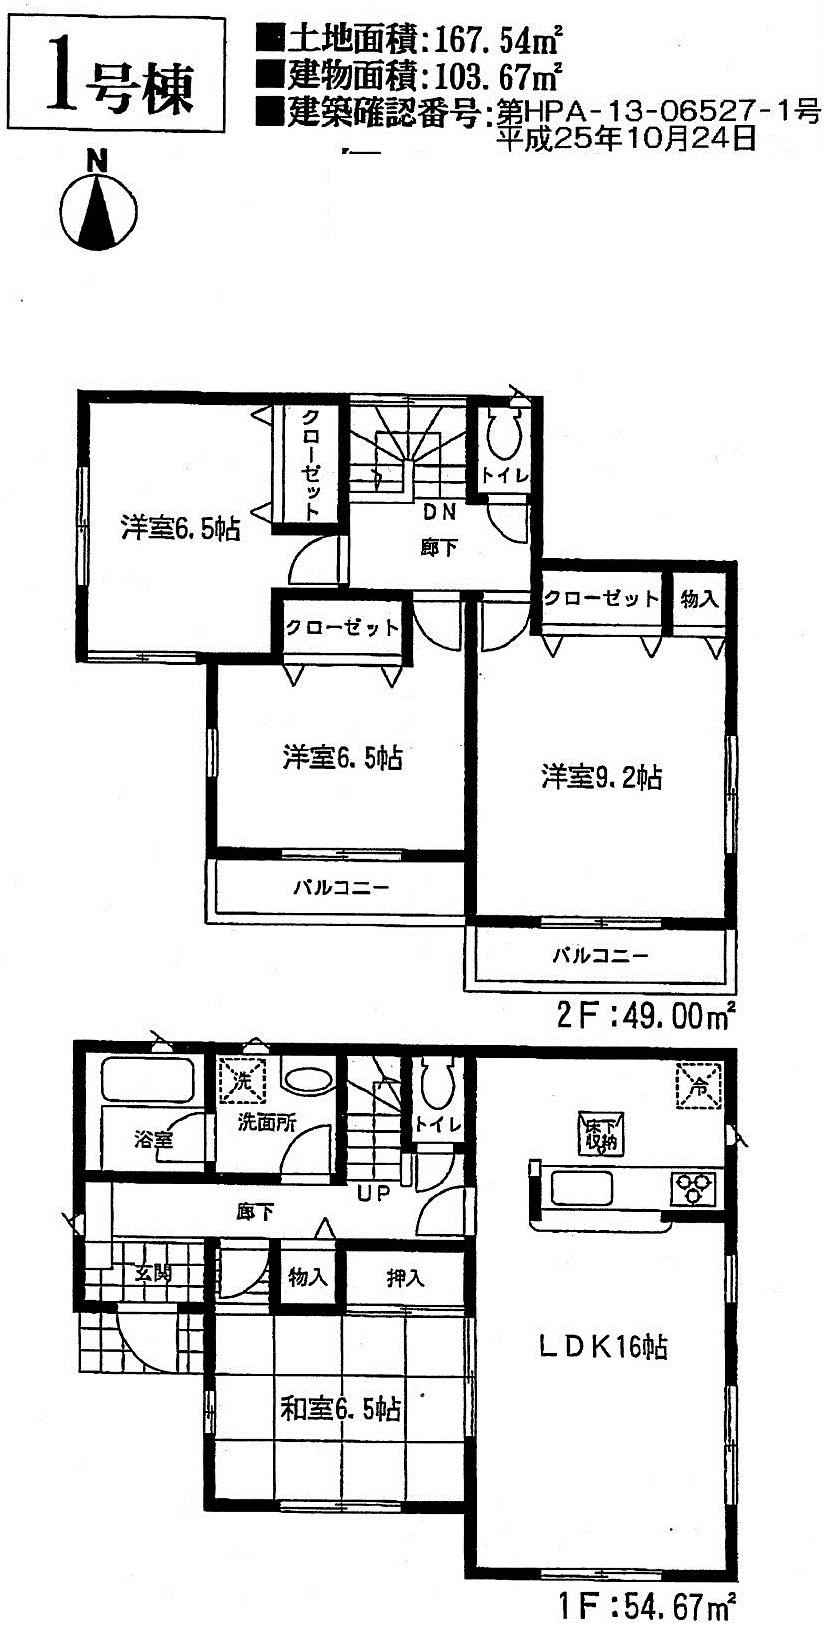 Floor plan. (1 Building), Price 19,800,000 yen, 4LDK, Land area 167.54 sq m , Building area 103.67 sq m